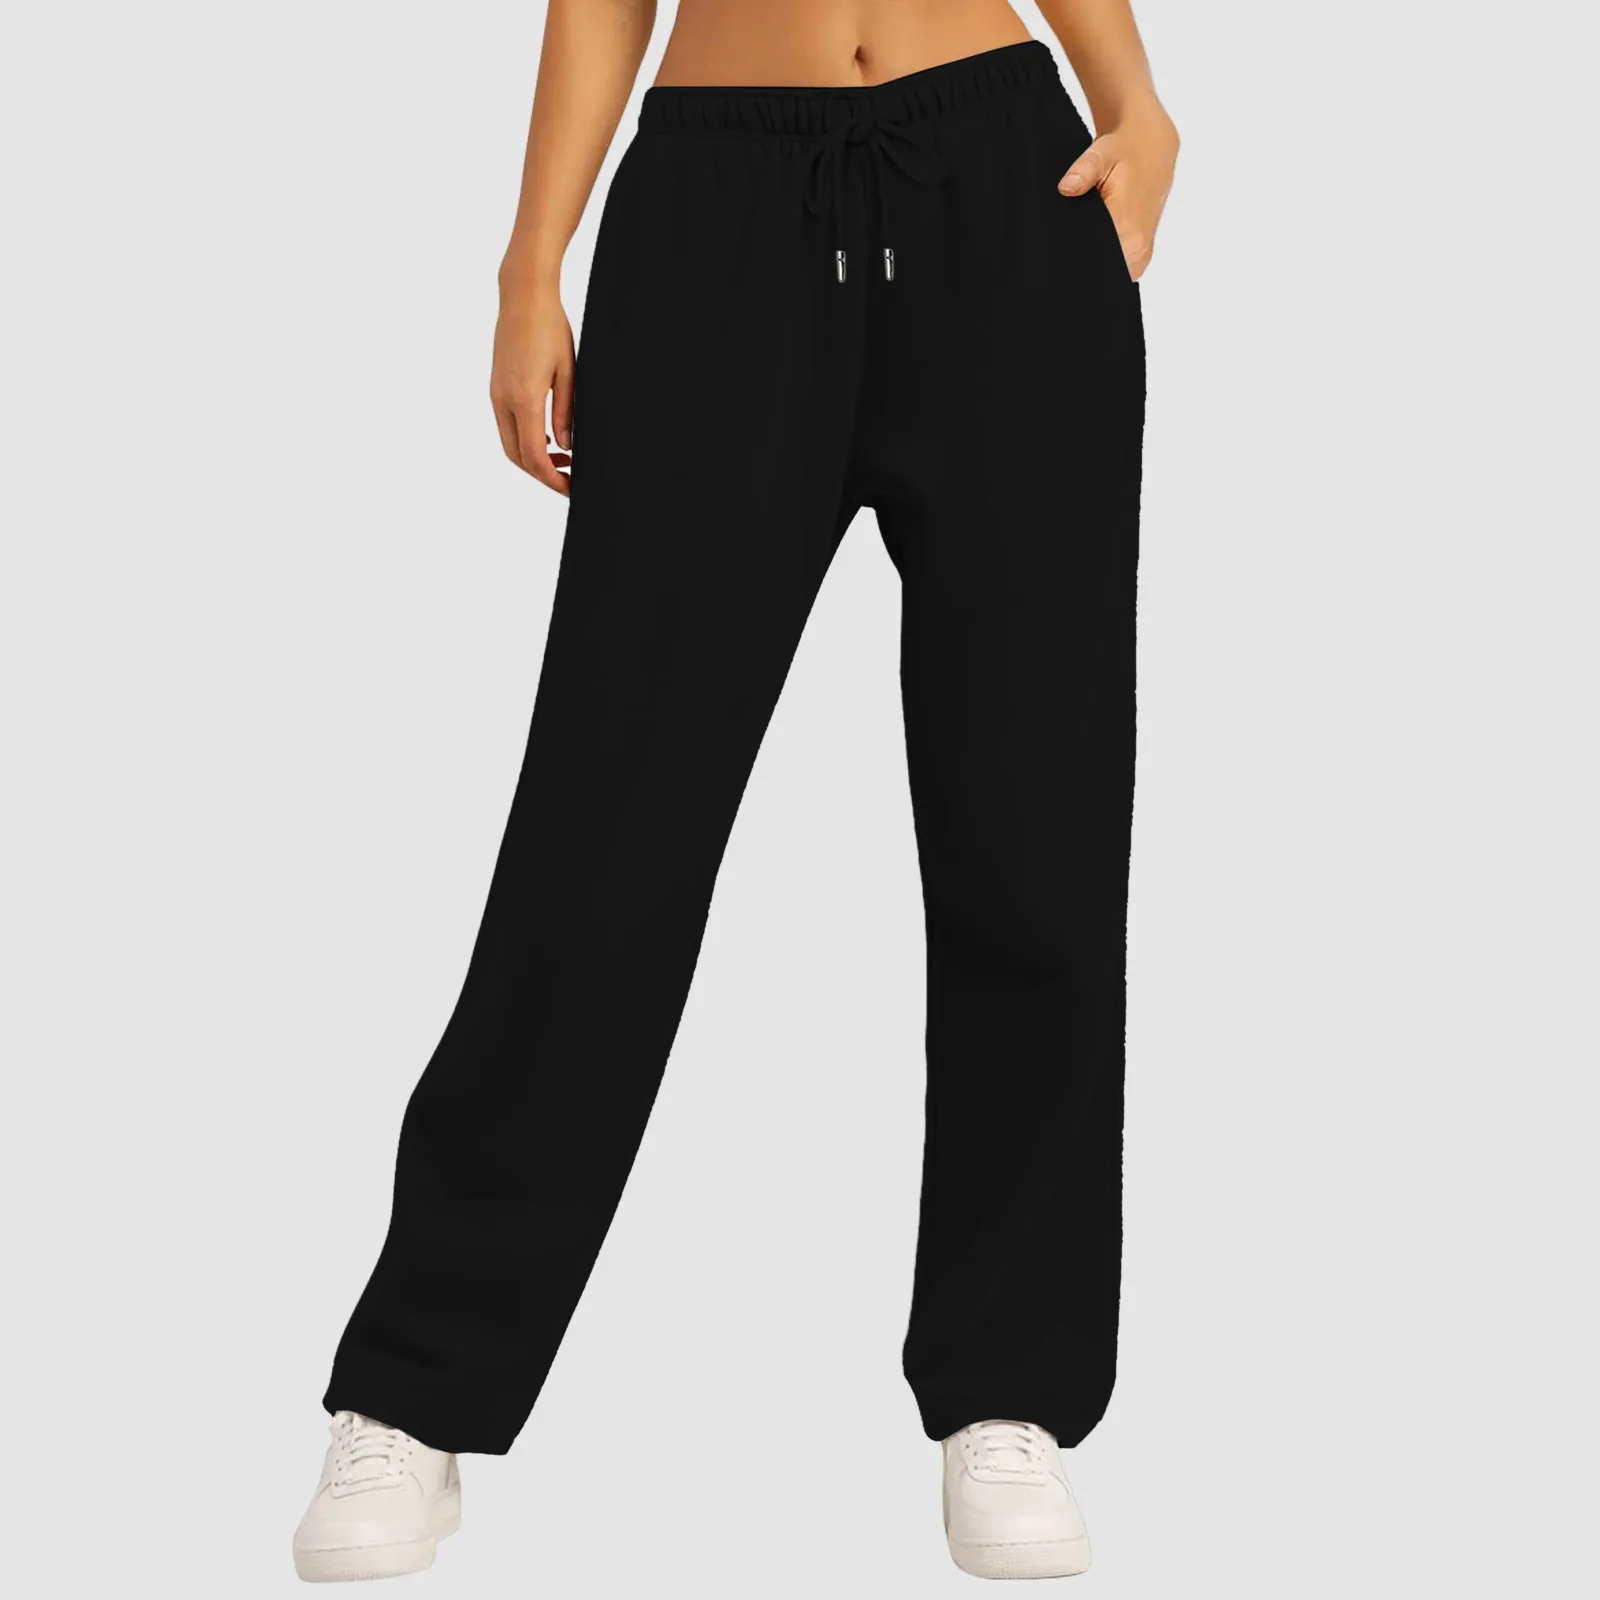 Women's Fleece Lined Sweatpants Straight Pants Bottom All-Math Plain Pants